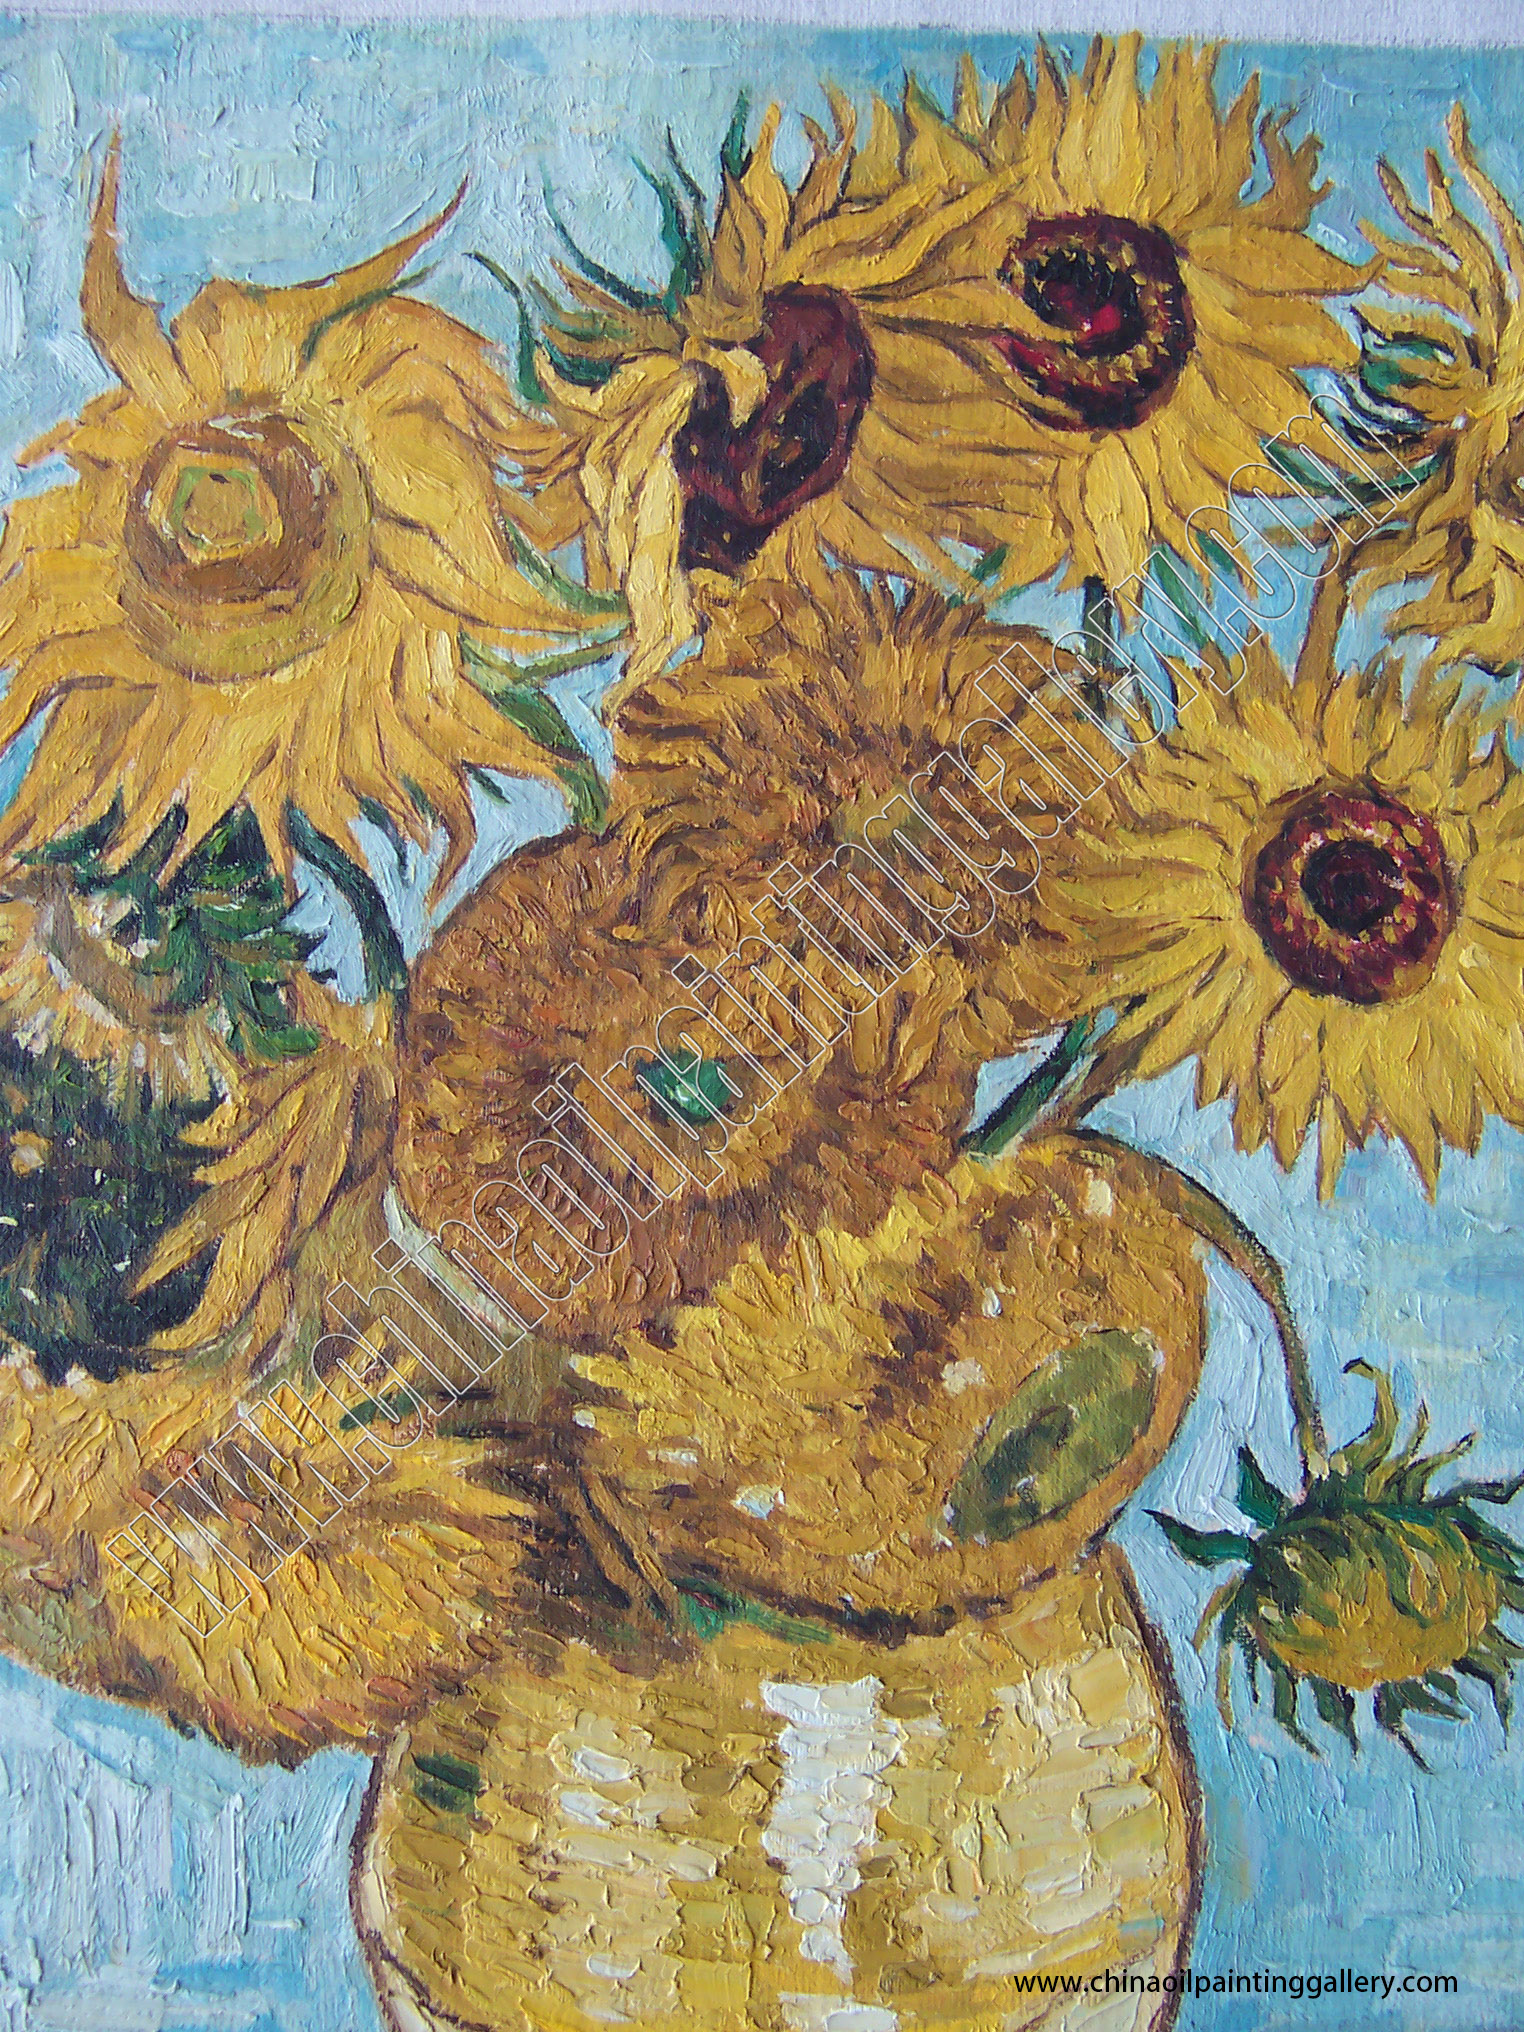 Vincent van Gogh Sunflowers - Oil painting reproductions details 6